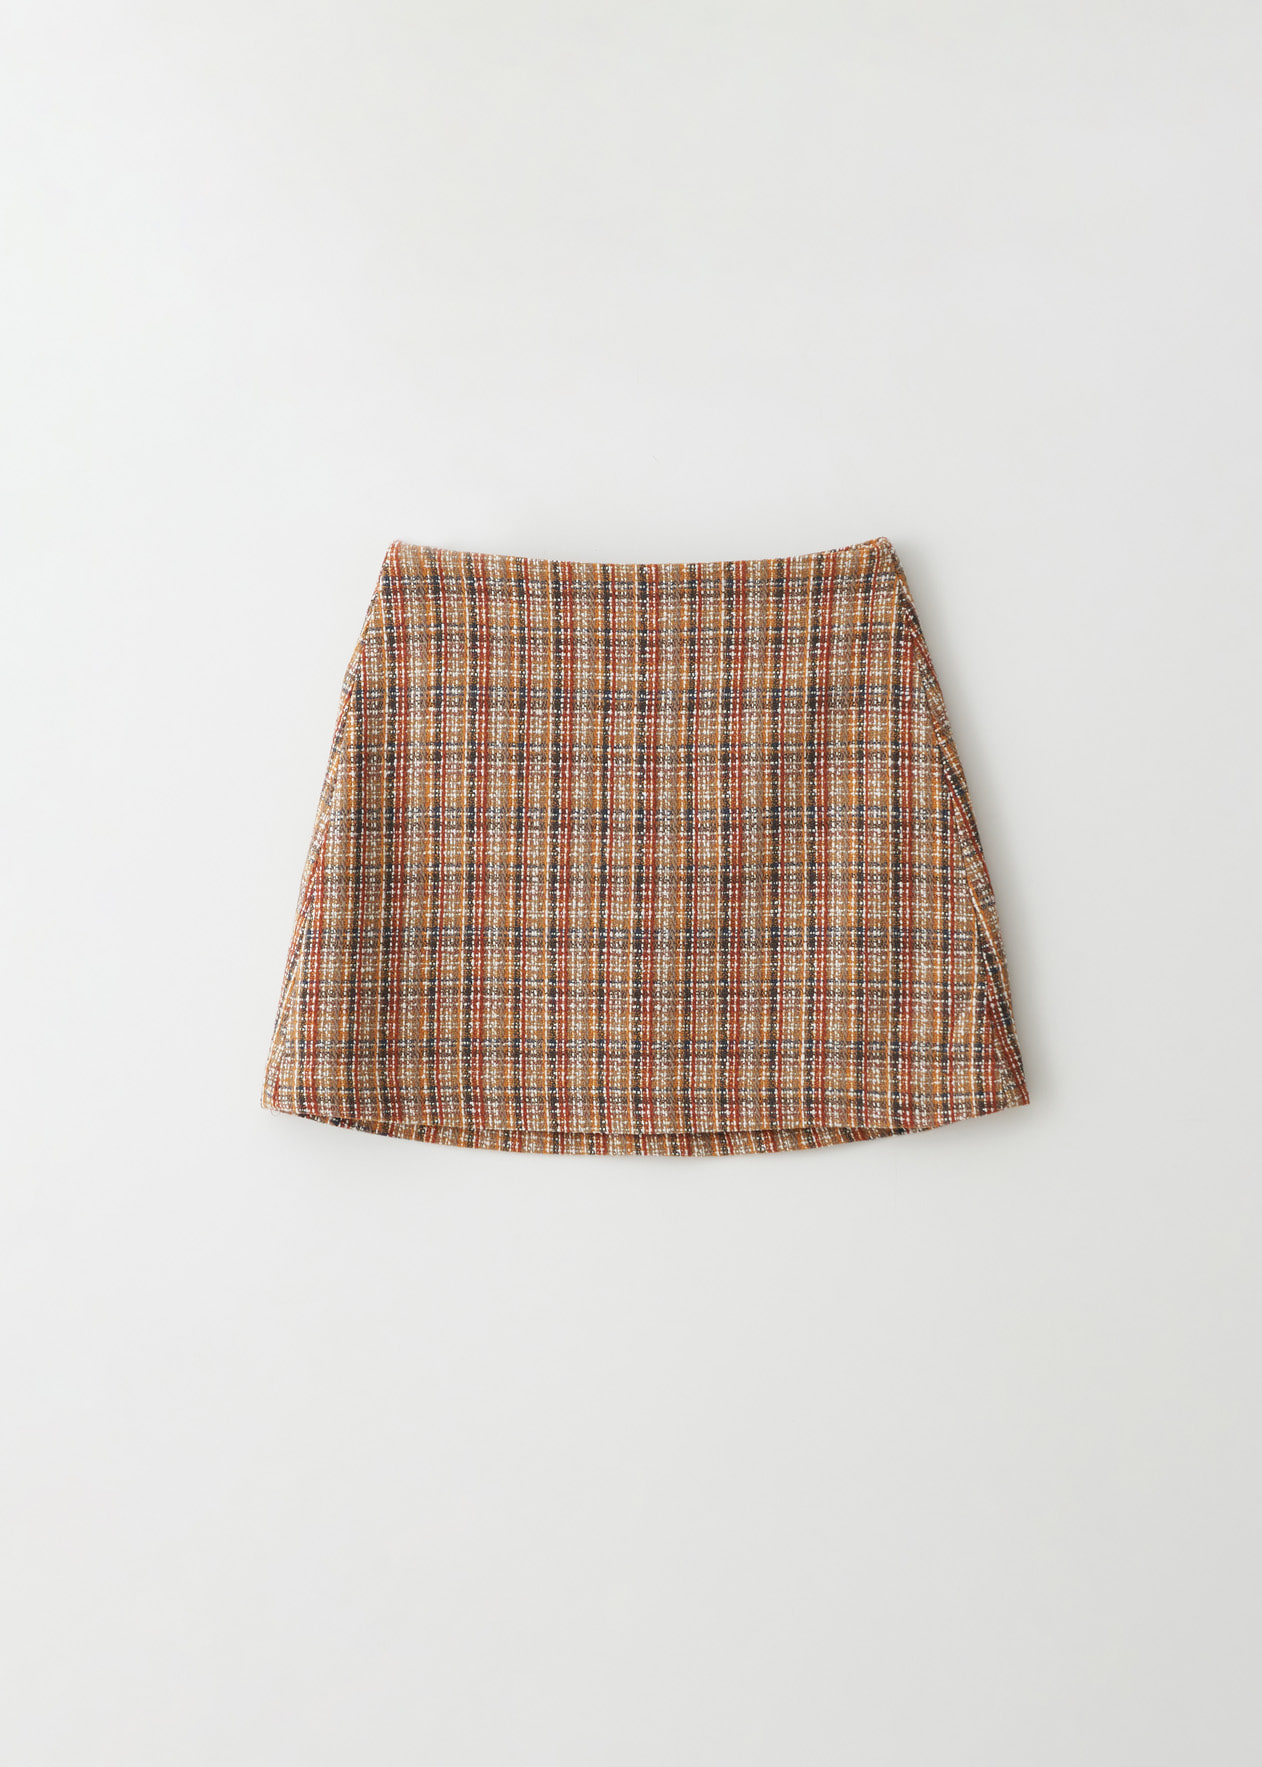 SALE_Check mini skirt